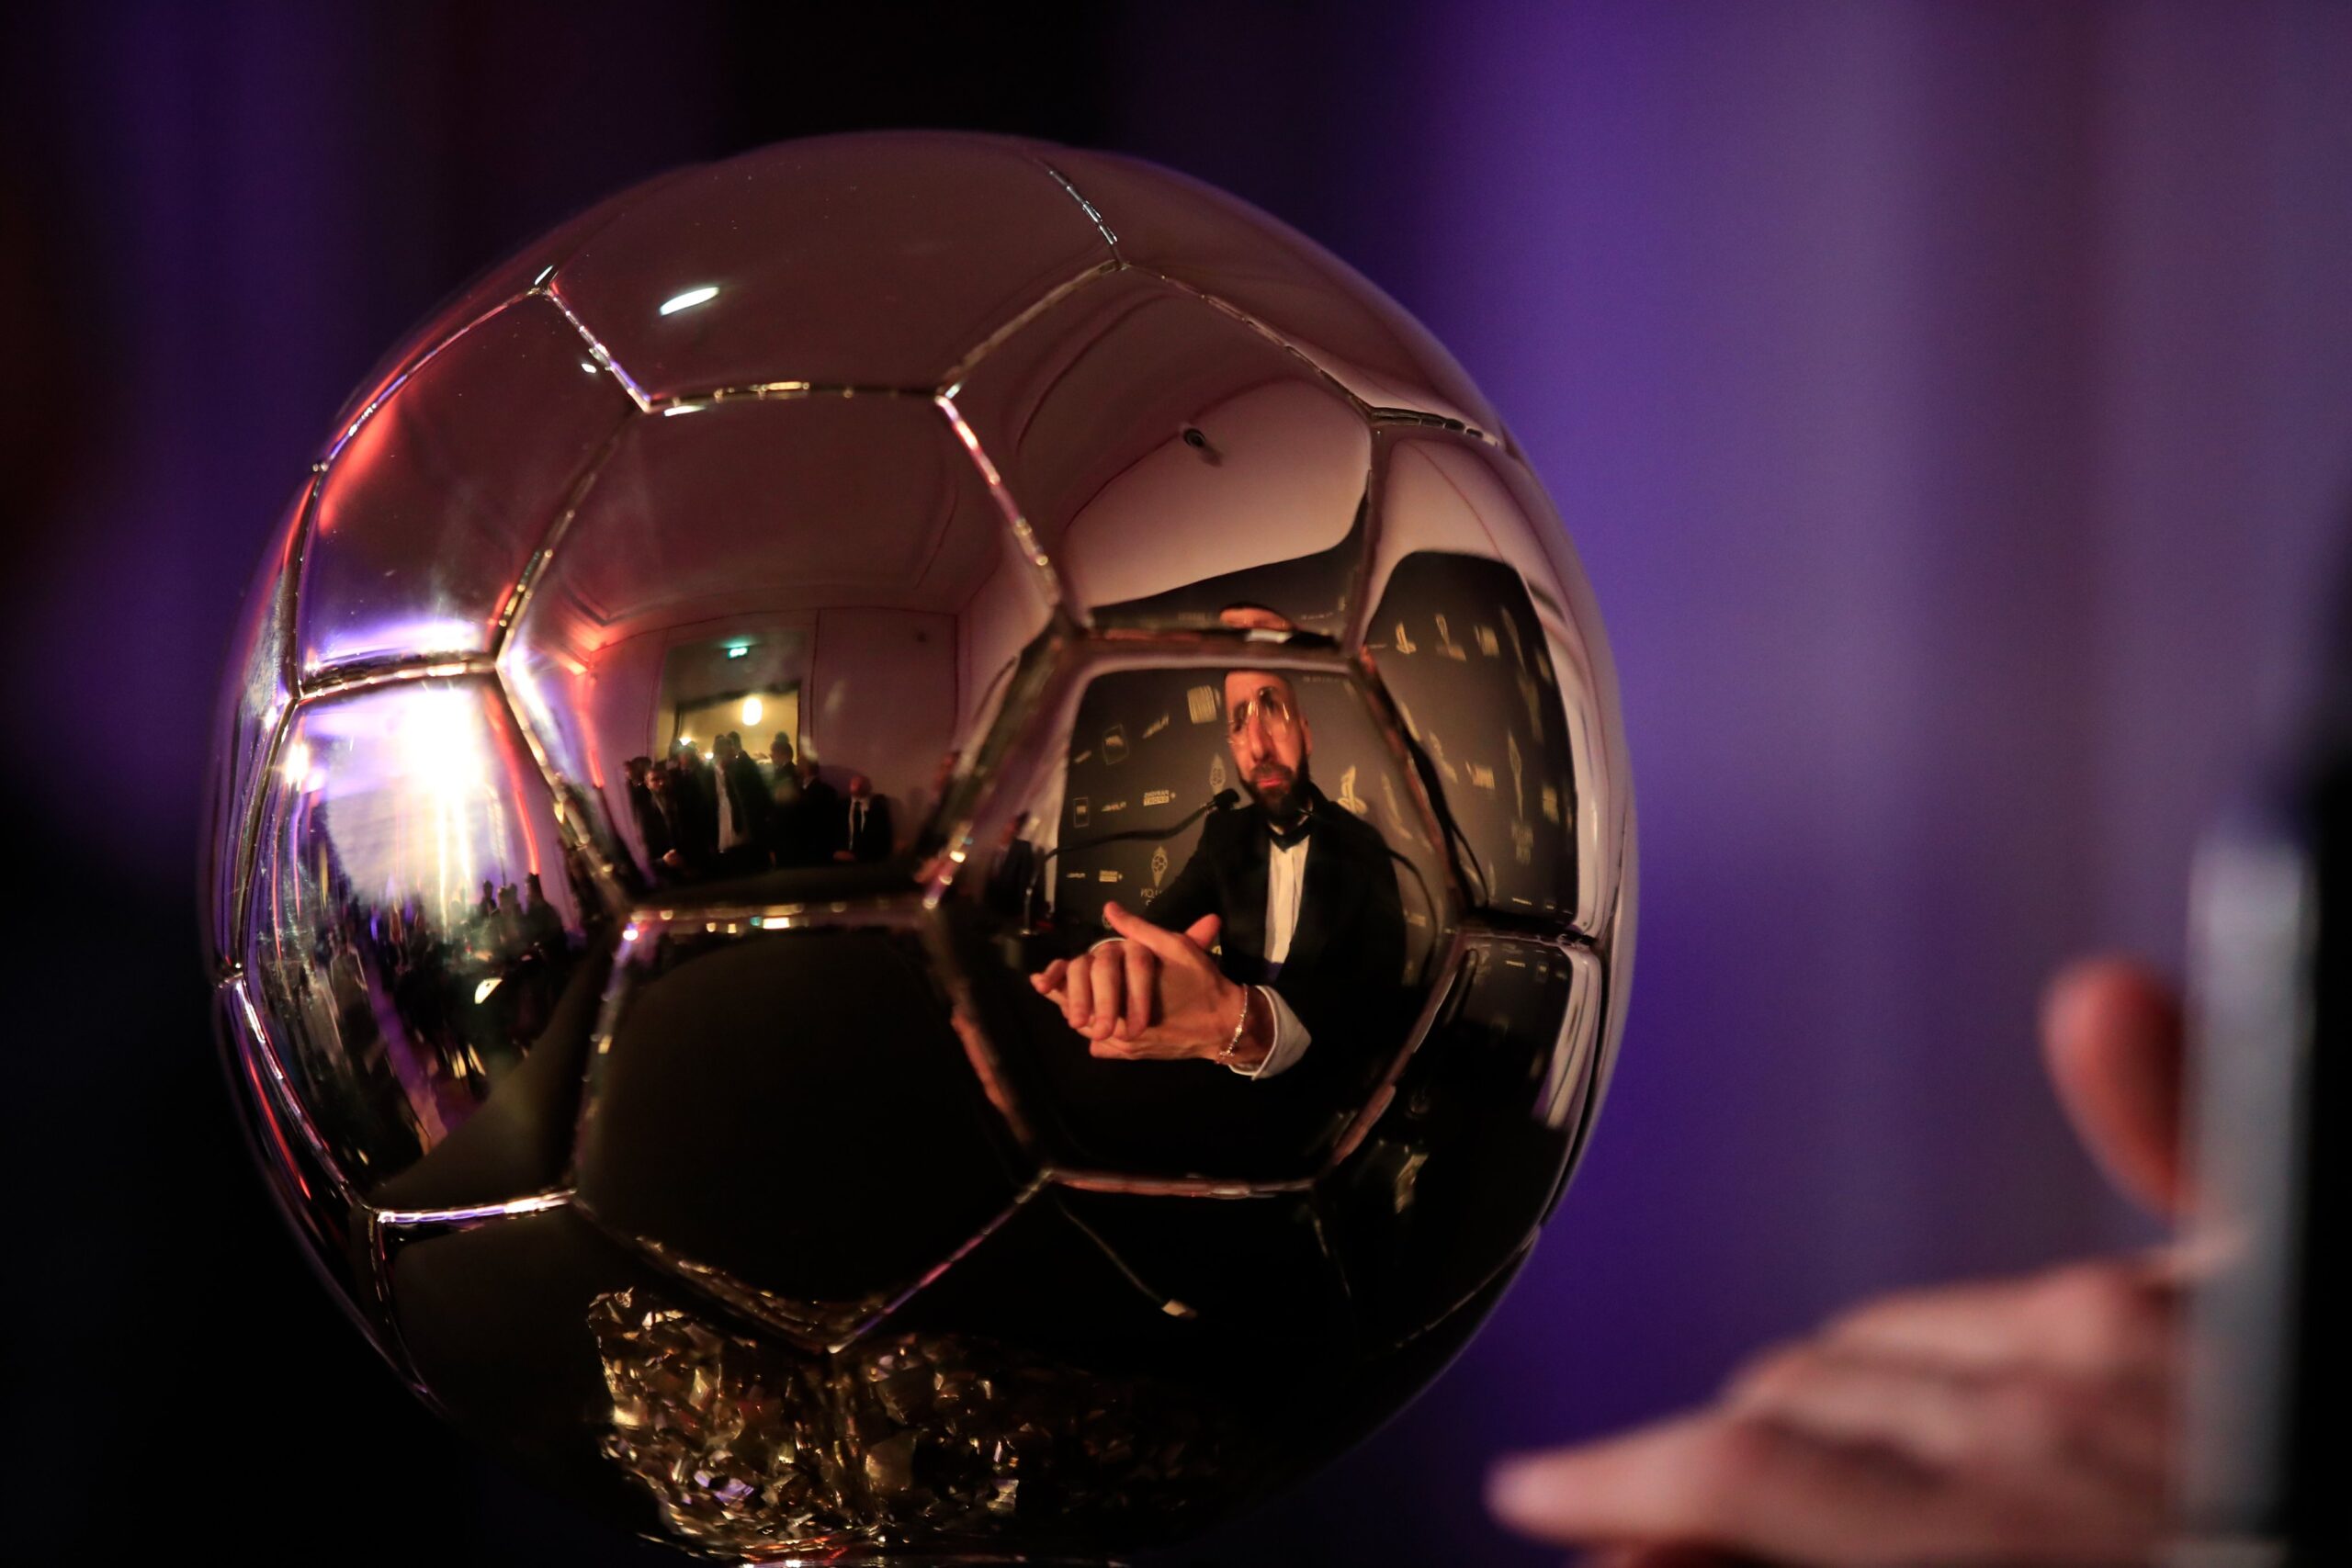 Karim Benzema Wins The 2022 Ballon d'Or Award! 